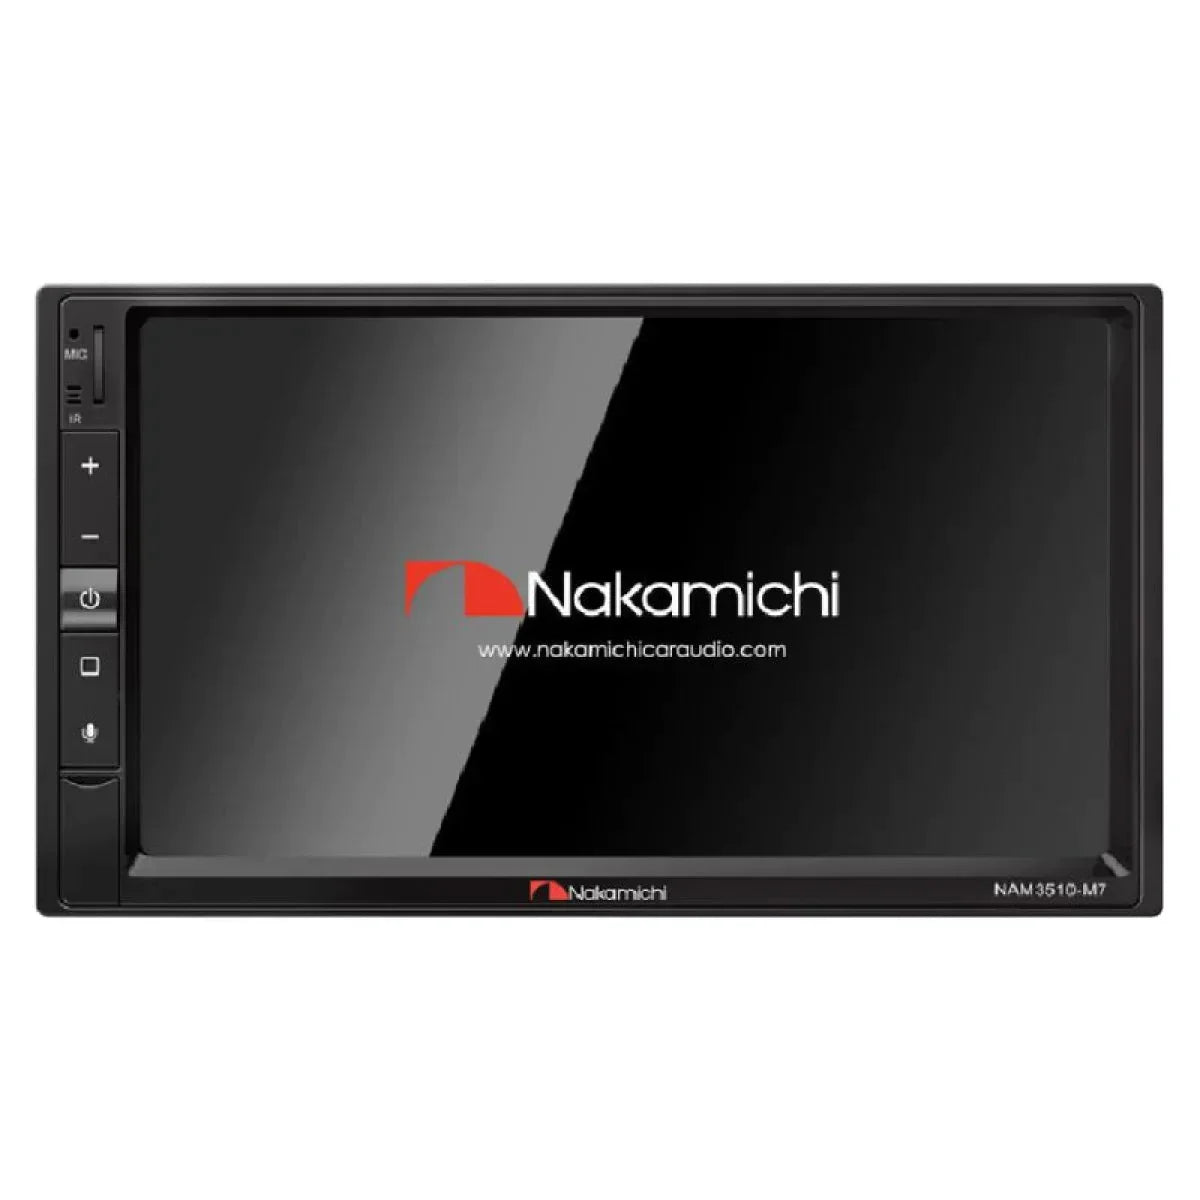 Nakamichi-NAM3510-M7-2-DIN Autoradio-Masori.de